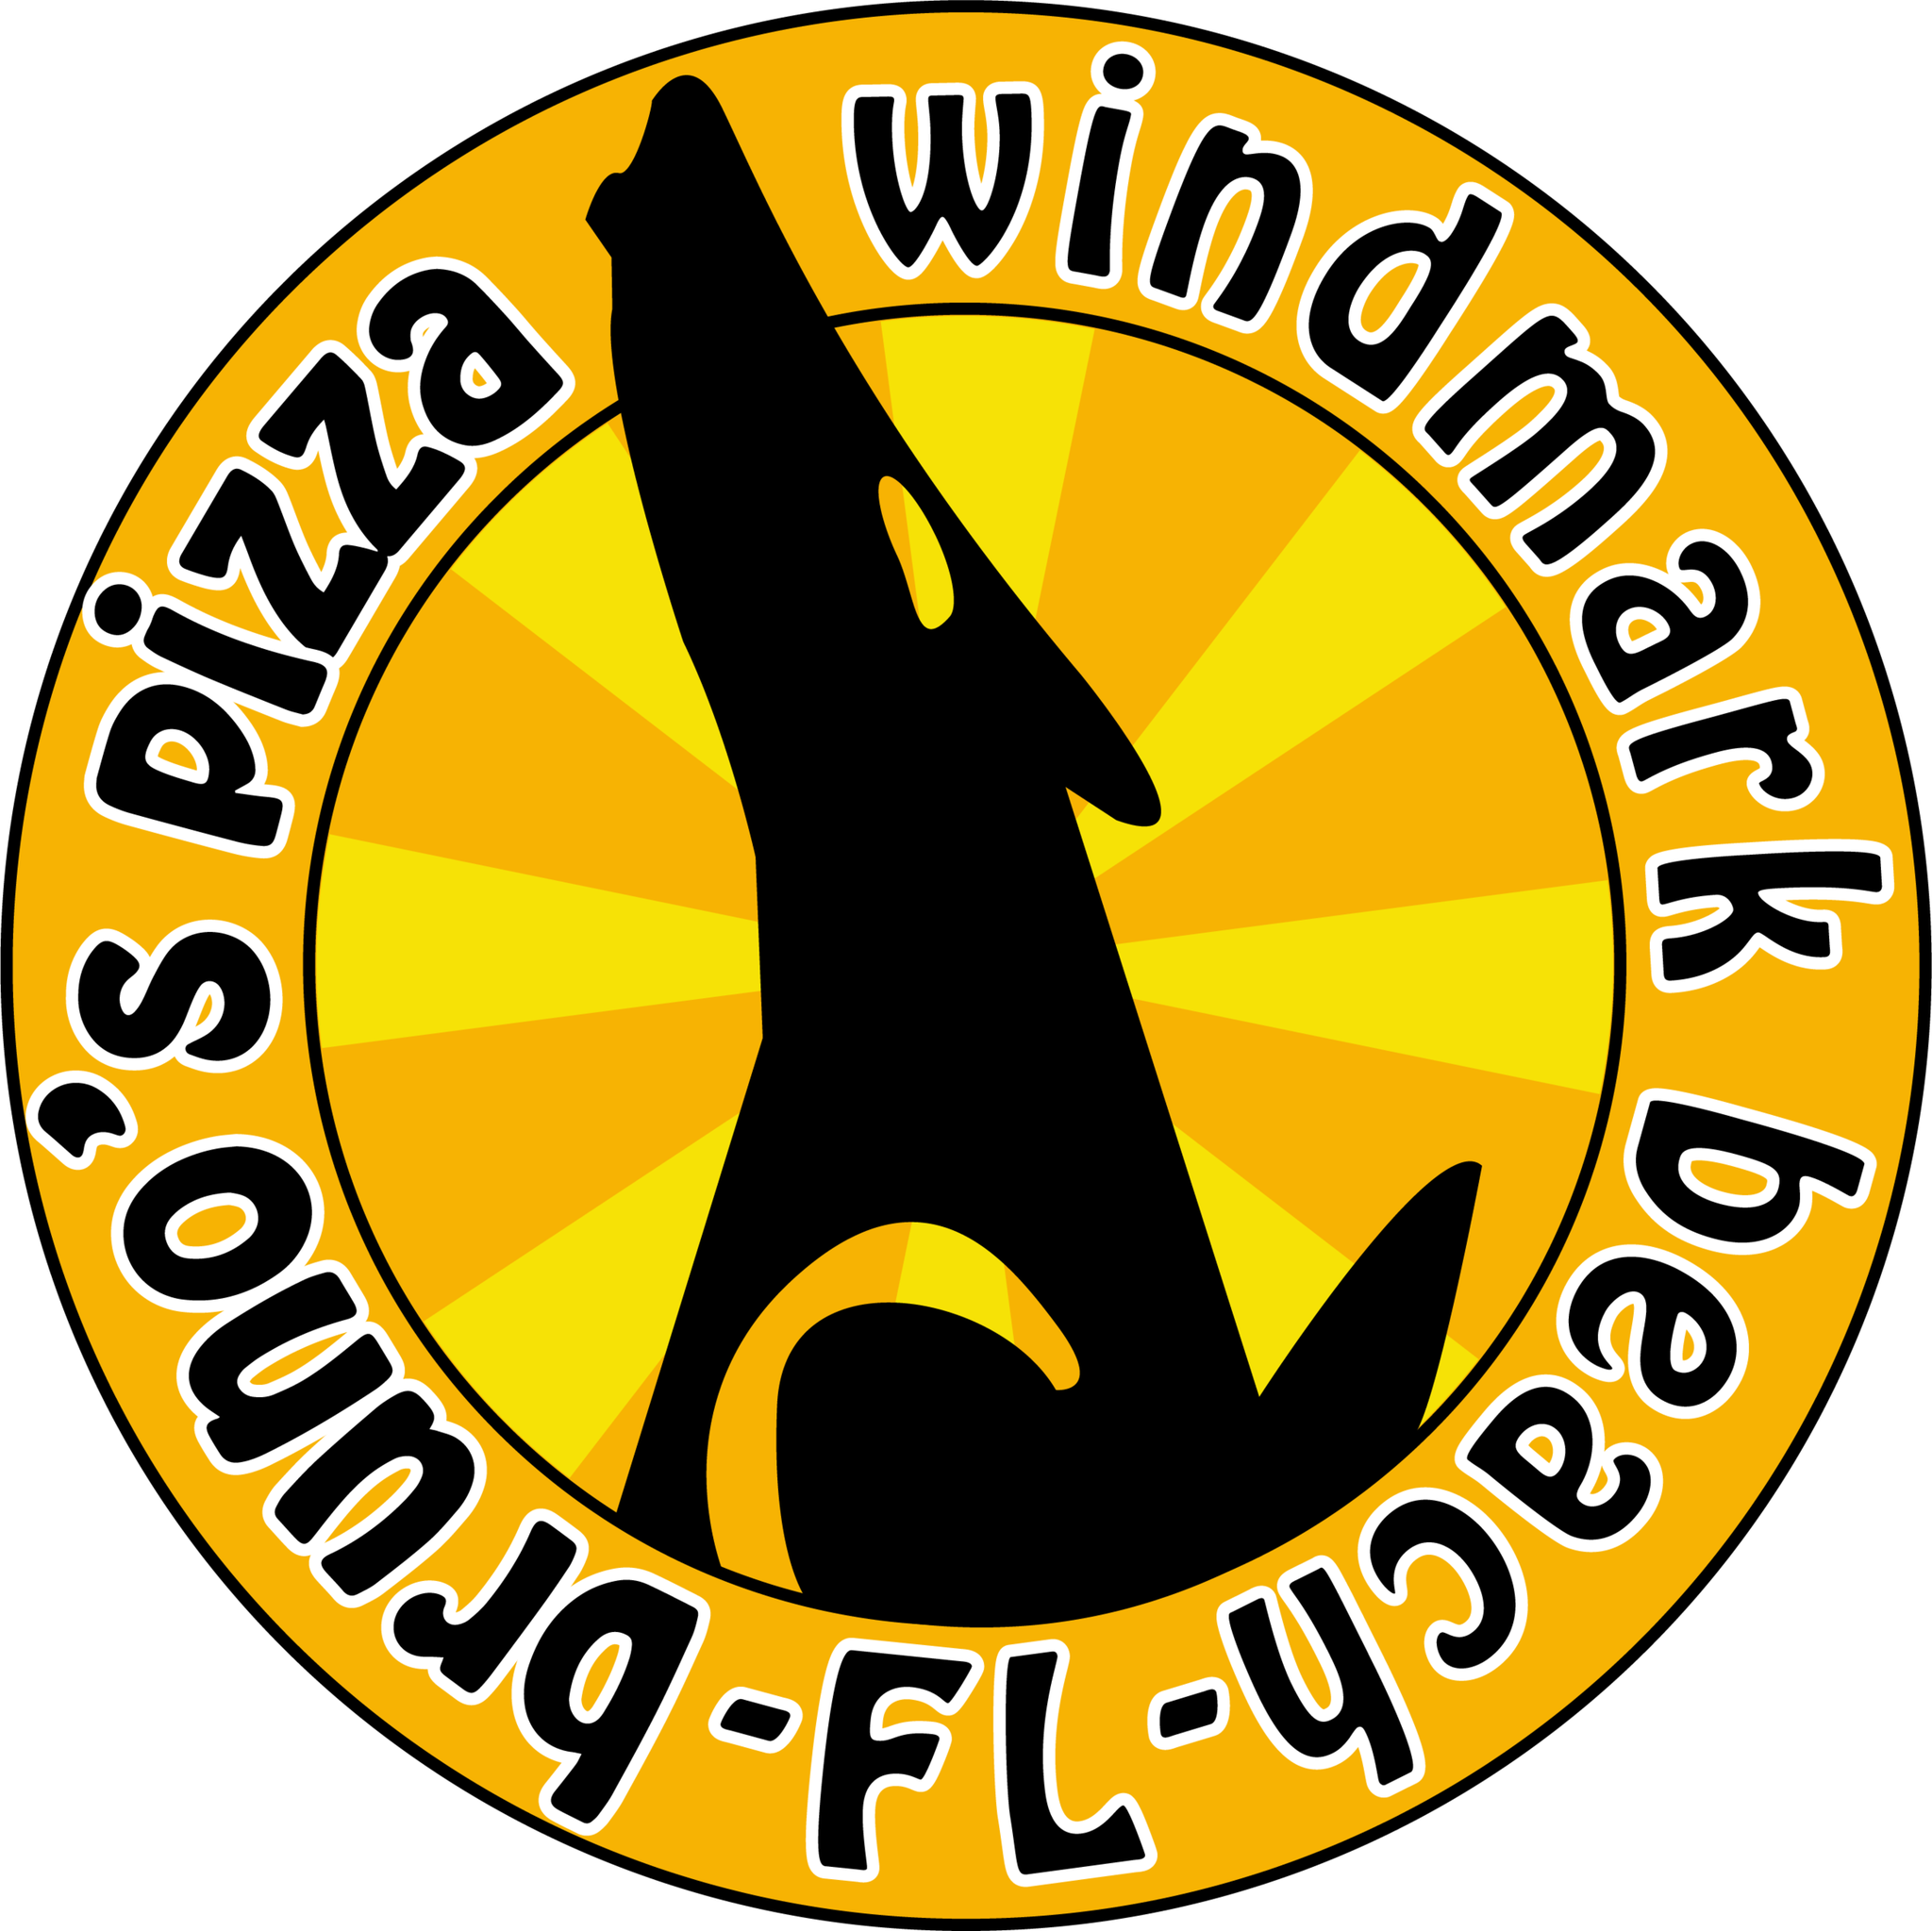 Fit As A Fiddle 110 Goodmorning St, Port St Joe Florida 32456